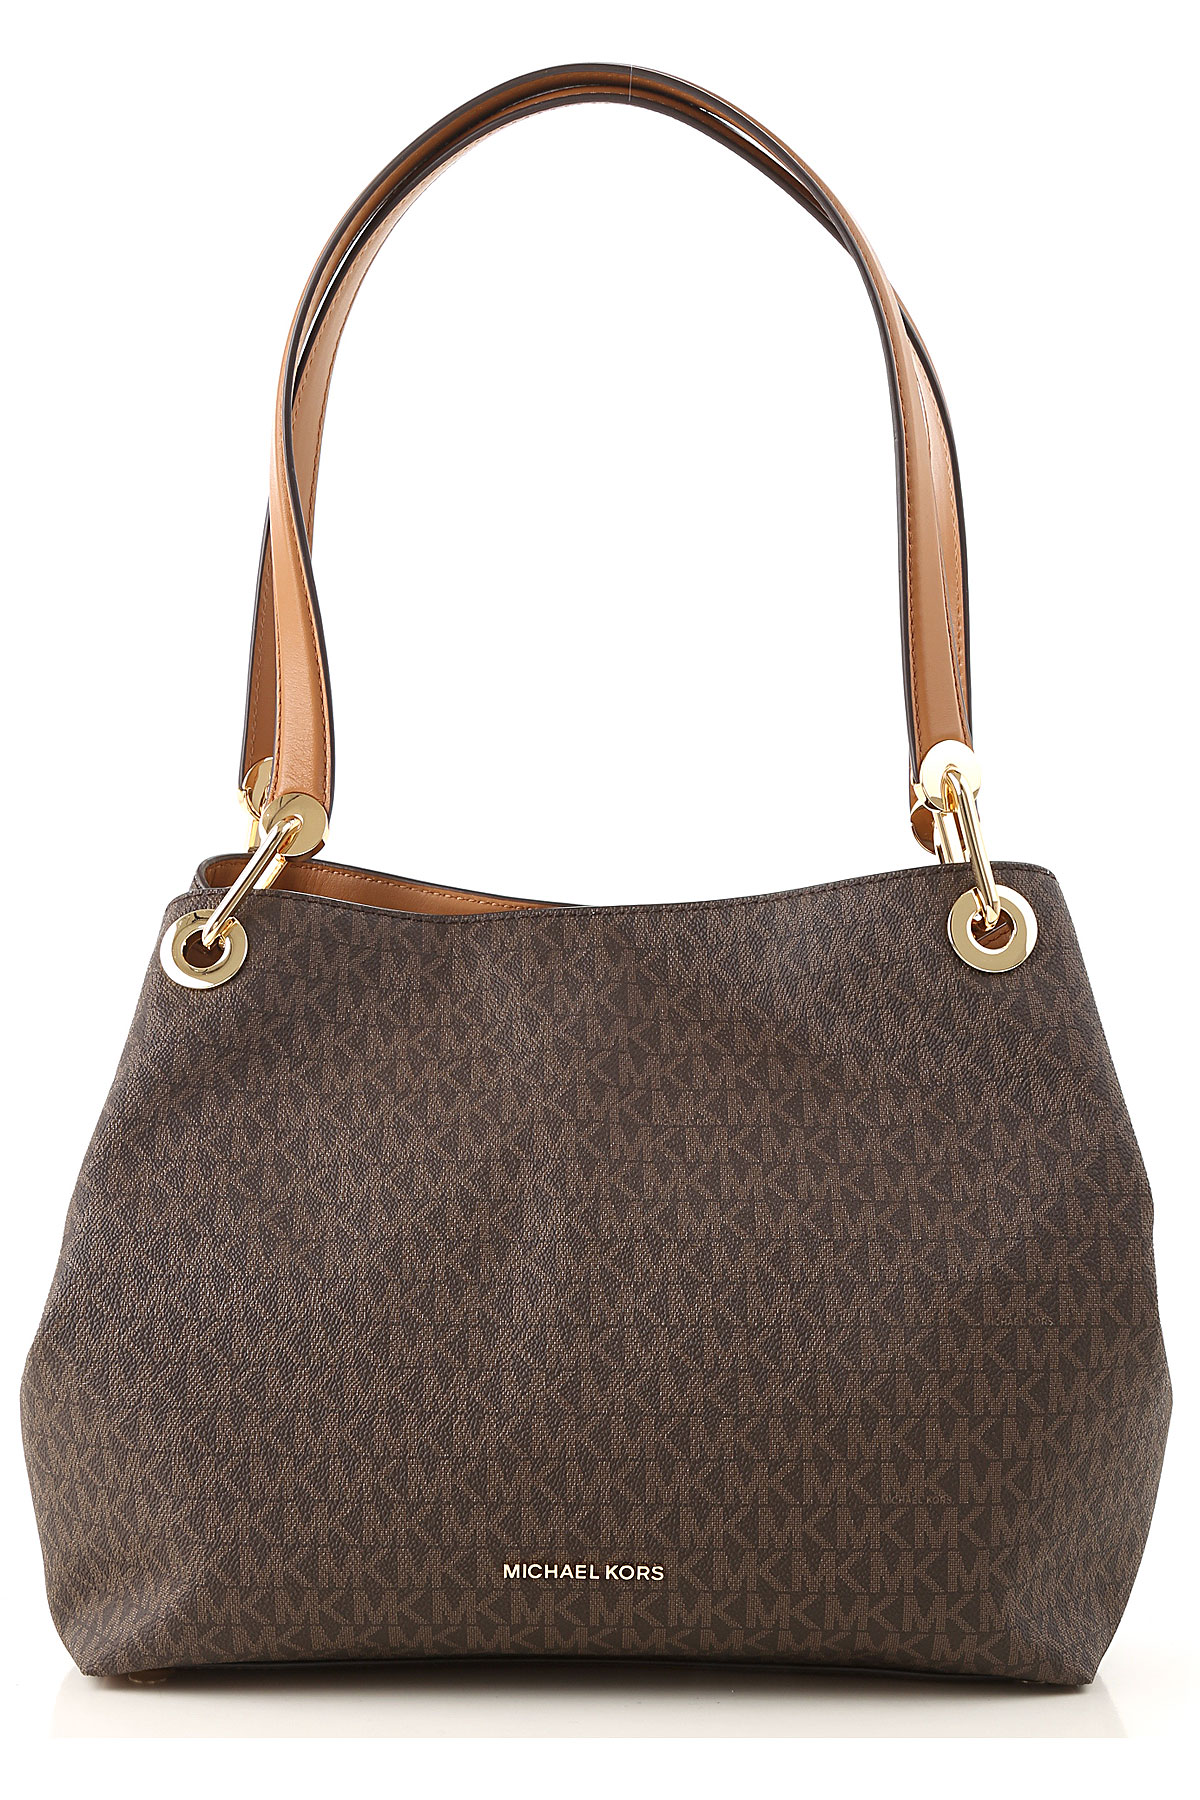 Handbags Michael Kors, Style code: 30h6grxe3v-200-